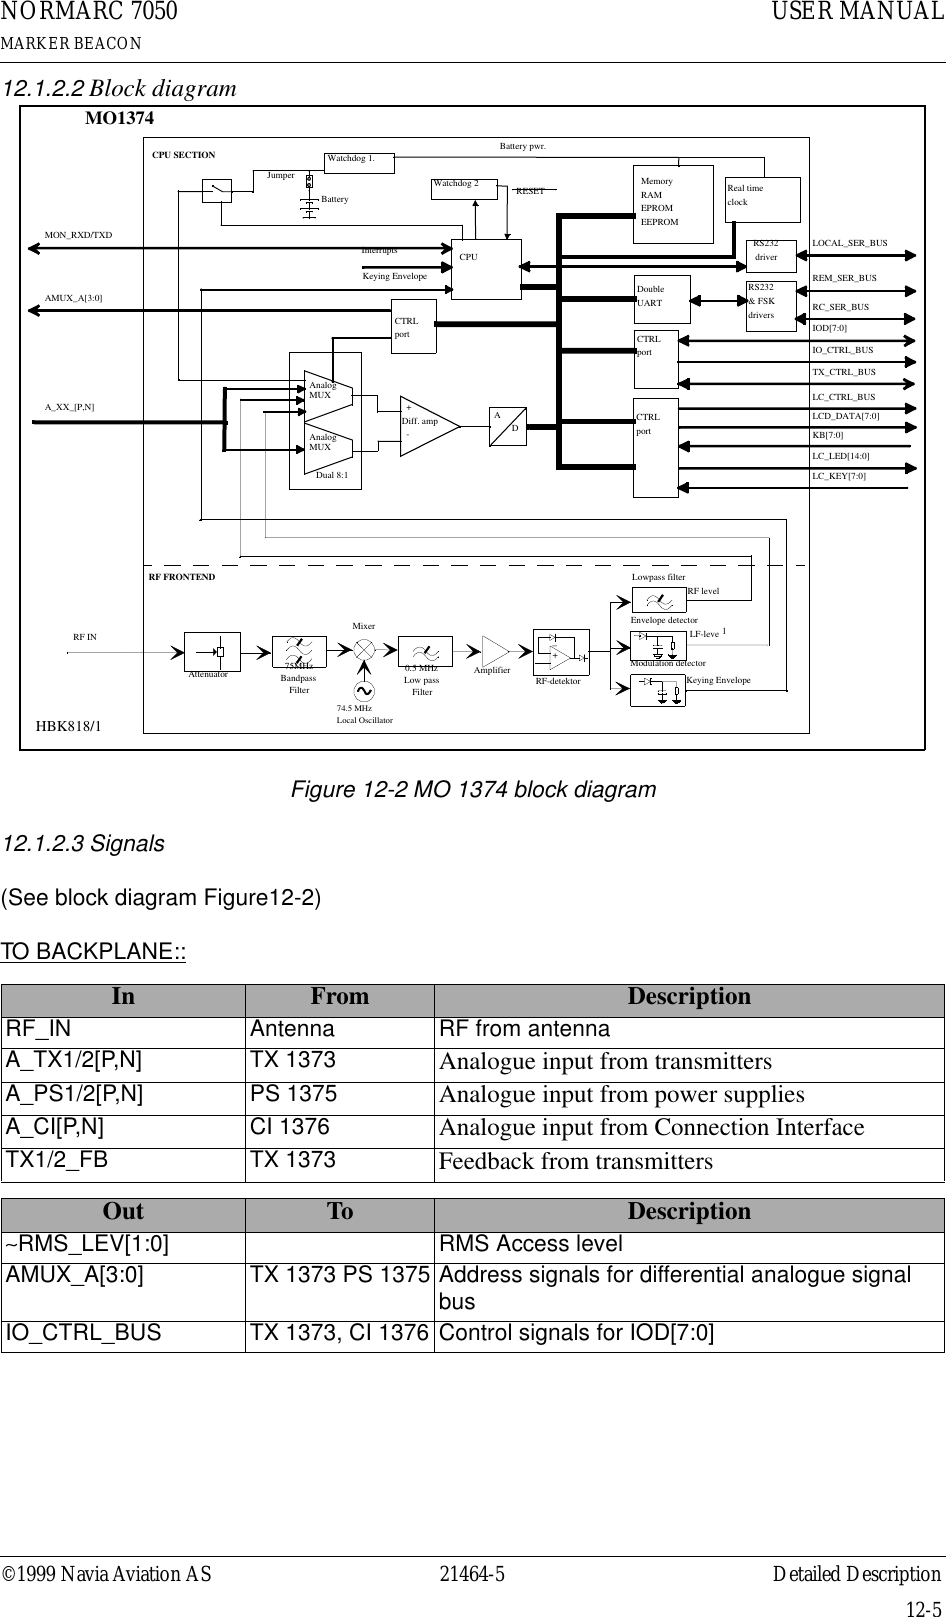 ©1999 Navia Aviation AS 21464-5 Detailed DescriptionUSER MANUALNORMARC 7050MARKER BEACON12-512.1.2.2 Block diagramFigure 12-2 MO 1374 block diagram12.1.2.3 Signals(See block diagram Figure12-2)TO BACKPLANE::In From DescriptionRF_IN Antenna RF from antennaA_TX1/2[P,N] TX 1373 Analogue input from transmittersA_PS1/2[P,N] PS 1375 Analogue input from power suppliesA_CI[P,N] CI 1376 Analogue input from Connection InterfaceTX1/2_FB TX 1373 Feedback from transmittersOut To Description∼RMS_LEV[1:0] RMS Access levelAMUX_A[3:0] TX 1373 PS 1375 Address signals for differential analogue signal busIO_CTRL_BUS TX 1373, CI 1376 Control signals for IOD[7:0]75MHz BandpassFilter0.5 MHzLow passFilter74.5 MHz Local Oscillator   MixerAttenuator Amplifier Modulation detectorEnvelope detectorRF-detektor+_Lowpass filterKeying EnvelopeLF-leve lRF level+-InterruptsJumperCPUCTRLportDoubleUARTAnalogMUXAnalogMUXCTRLportADMO1374Watchdog 1.Battery RESET MemoryRAMEPROMEEPROMReal timeclockRS232&amp; FSKdriversDual 8:1CTRLportIOD[7:0]LCD_DATA[7:0]LC_KEY[7:0]LC_LED[14:0]MON_RXD/TXDCPU SECTIONRF FRONTENDDiff. ampKB[7:0]LC_CTRL_BUSIO_CTRL_BUSAMUX_A[3:0]RF INA_XX_[P,N]Keying EnvelopeBattery pwr.Watchdog 2RS232driverLOCAL_SER_BUSREM_SER_BUSRC_SER_BUSTX_CTRL_BUSHBK818/1